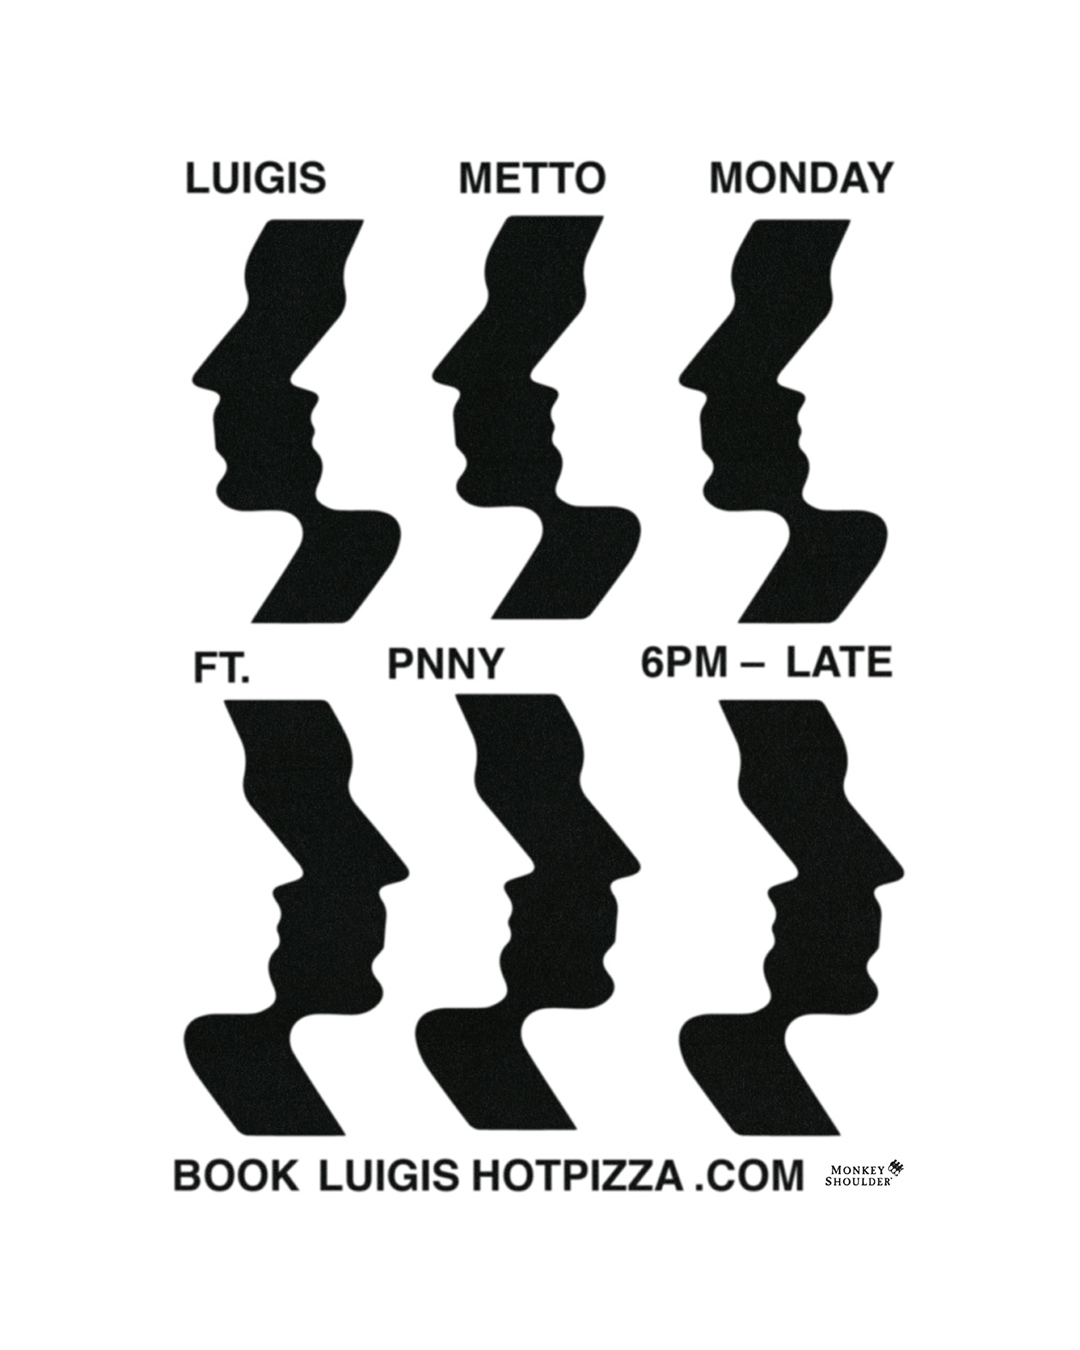 METTO MONDAYS AT LUIGI’S – DECEMBER 19TH thumbnail image